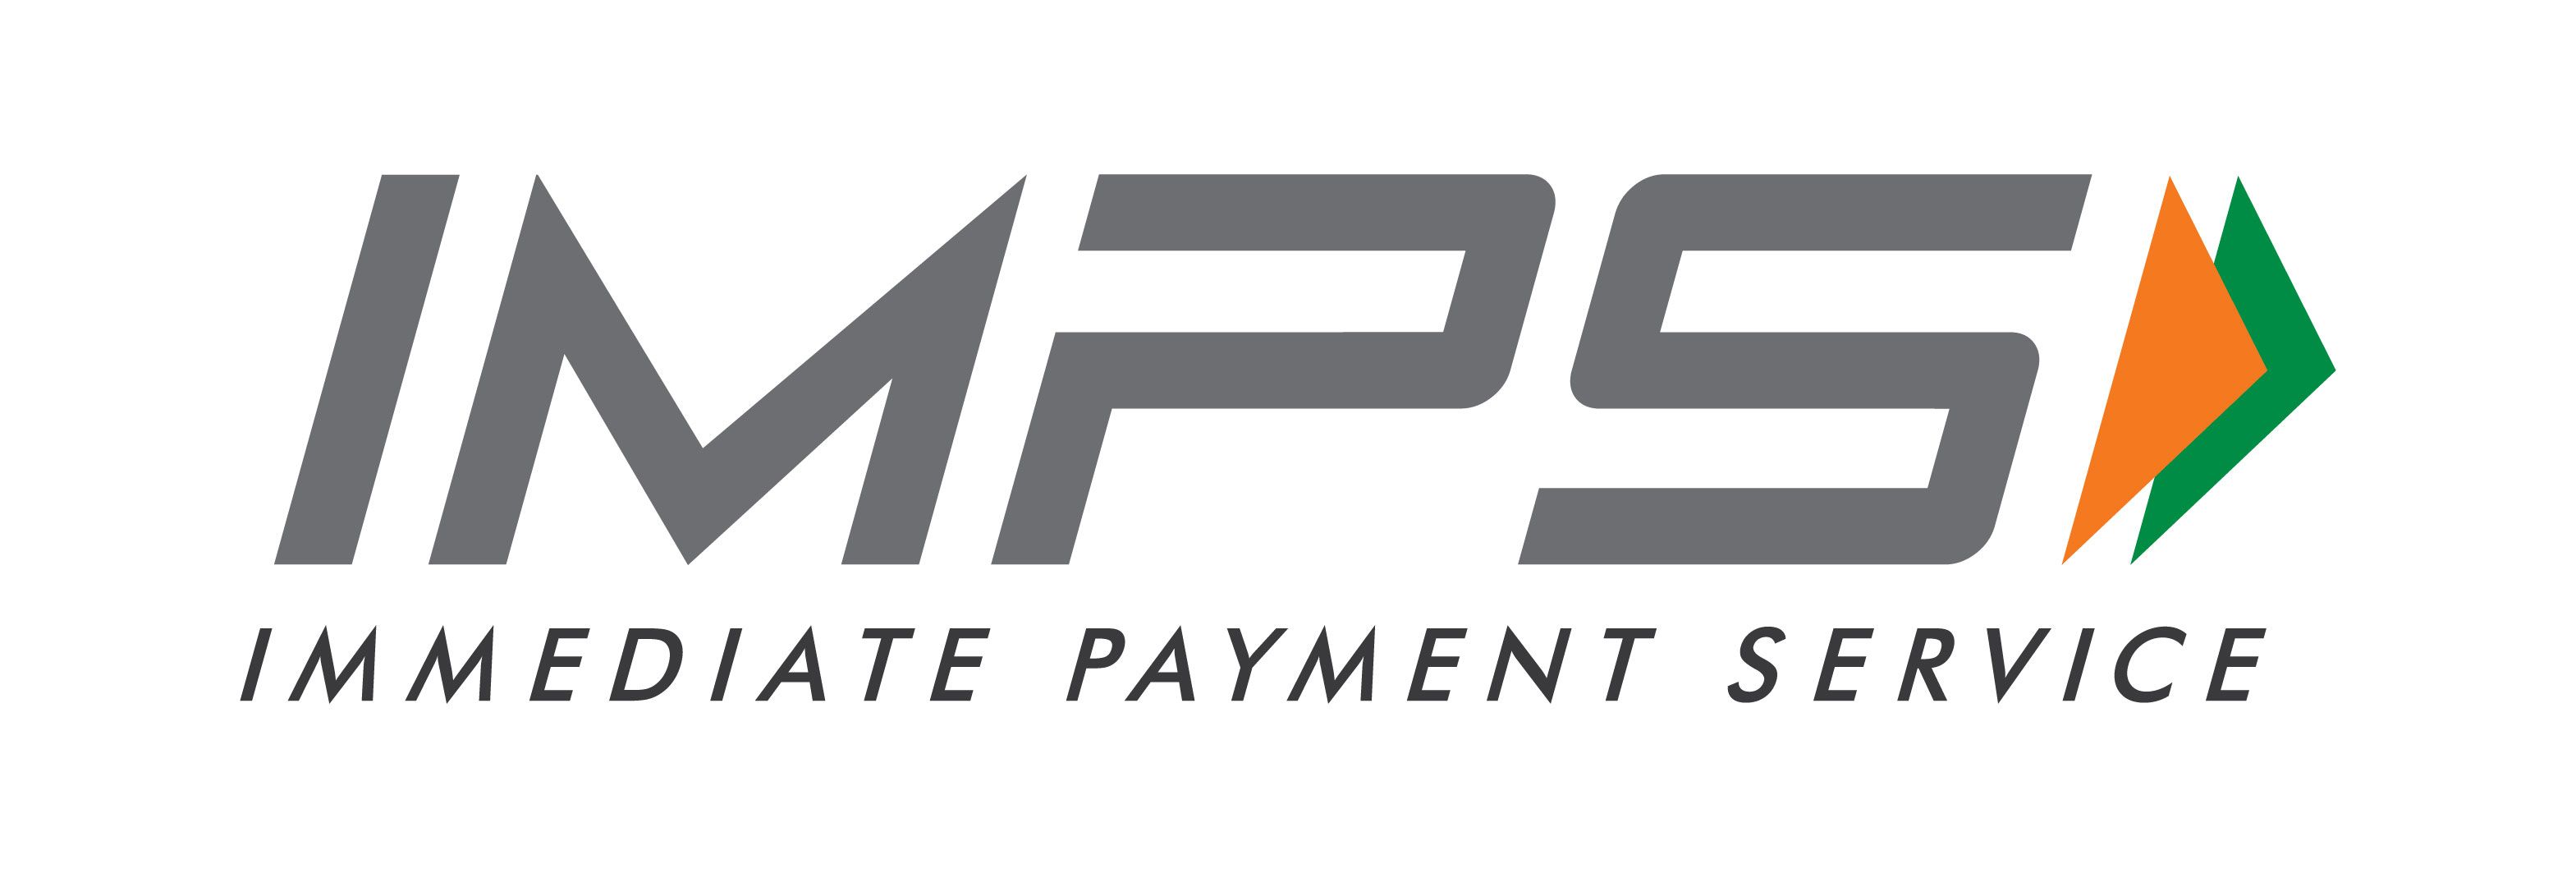 IMPS logo